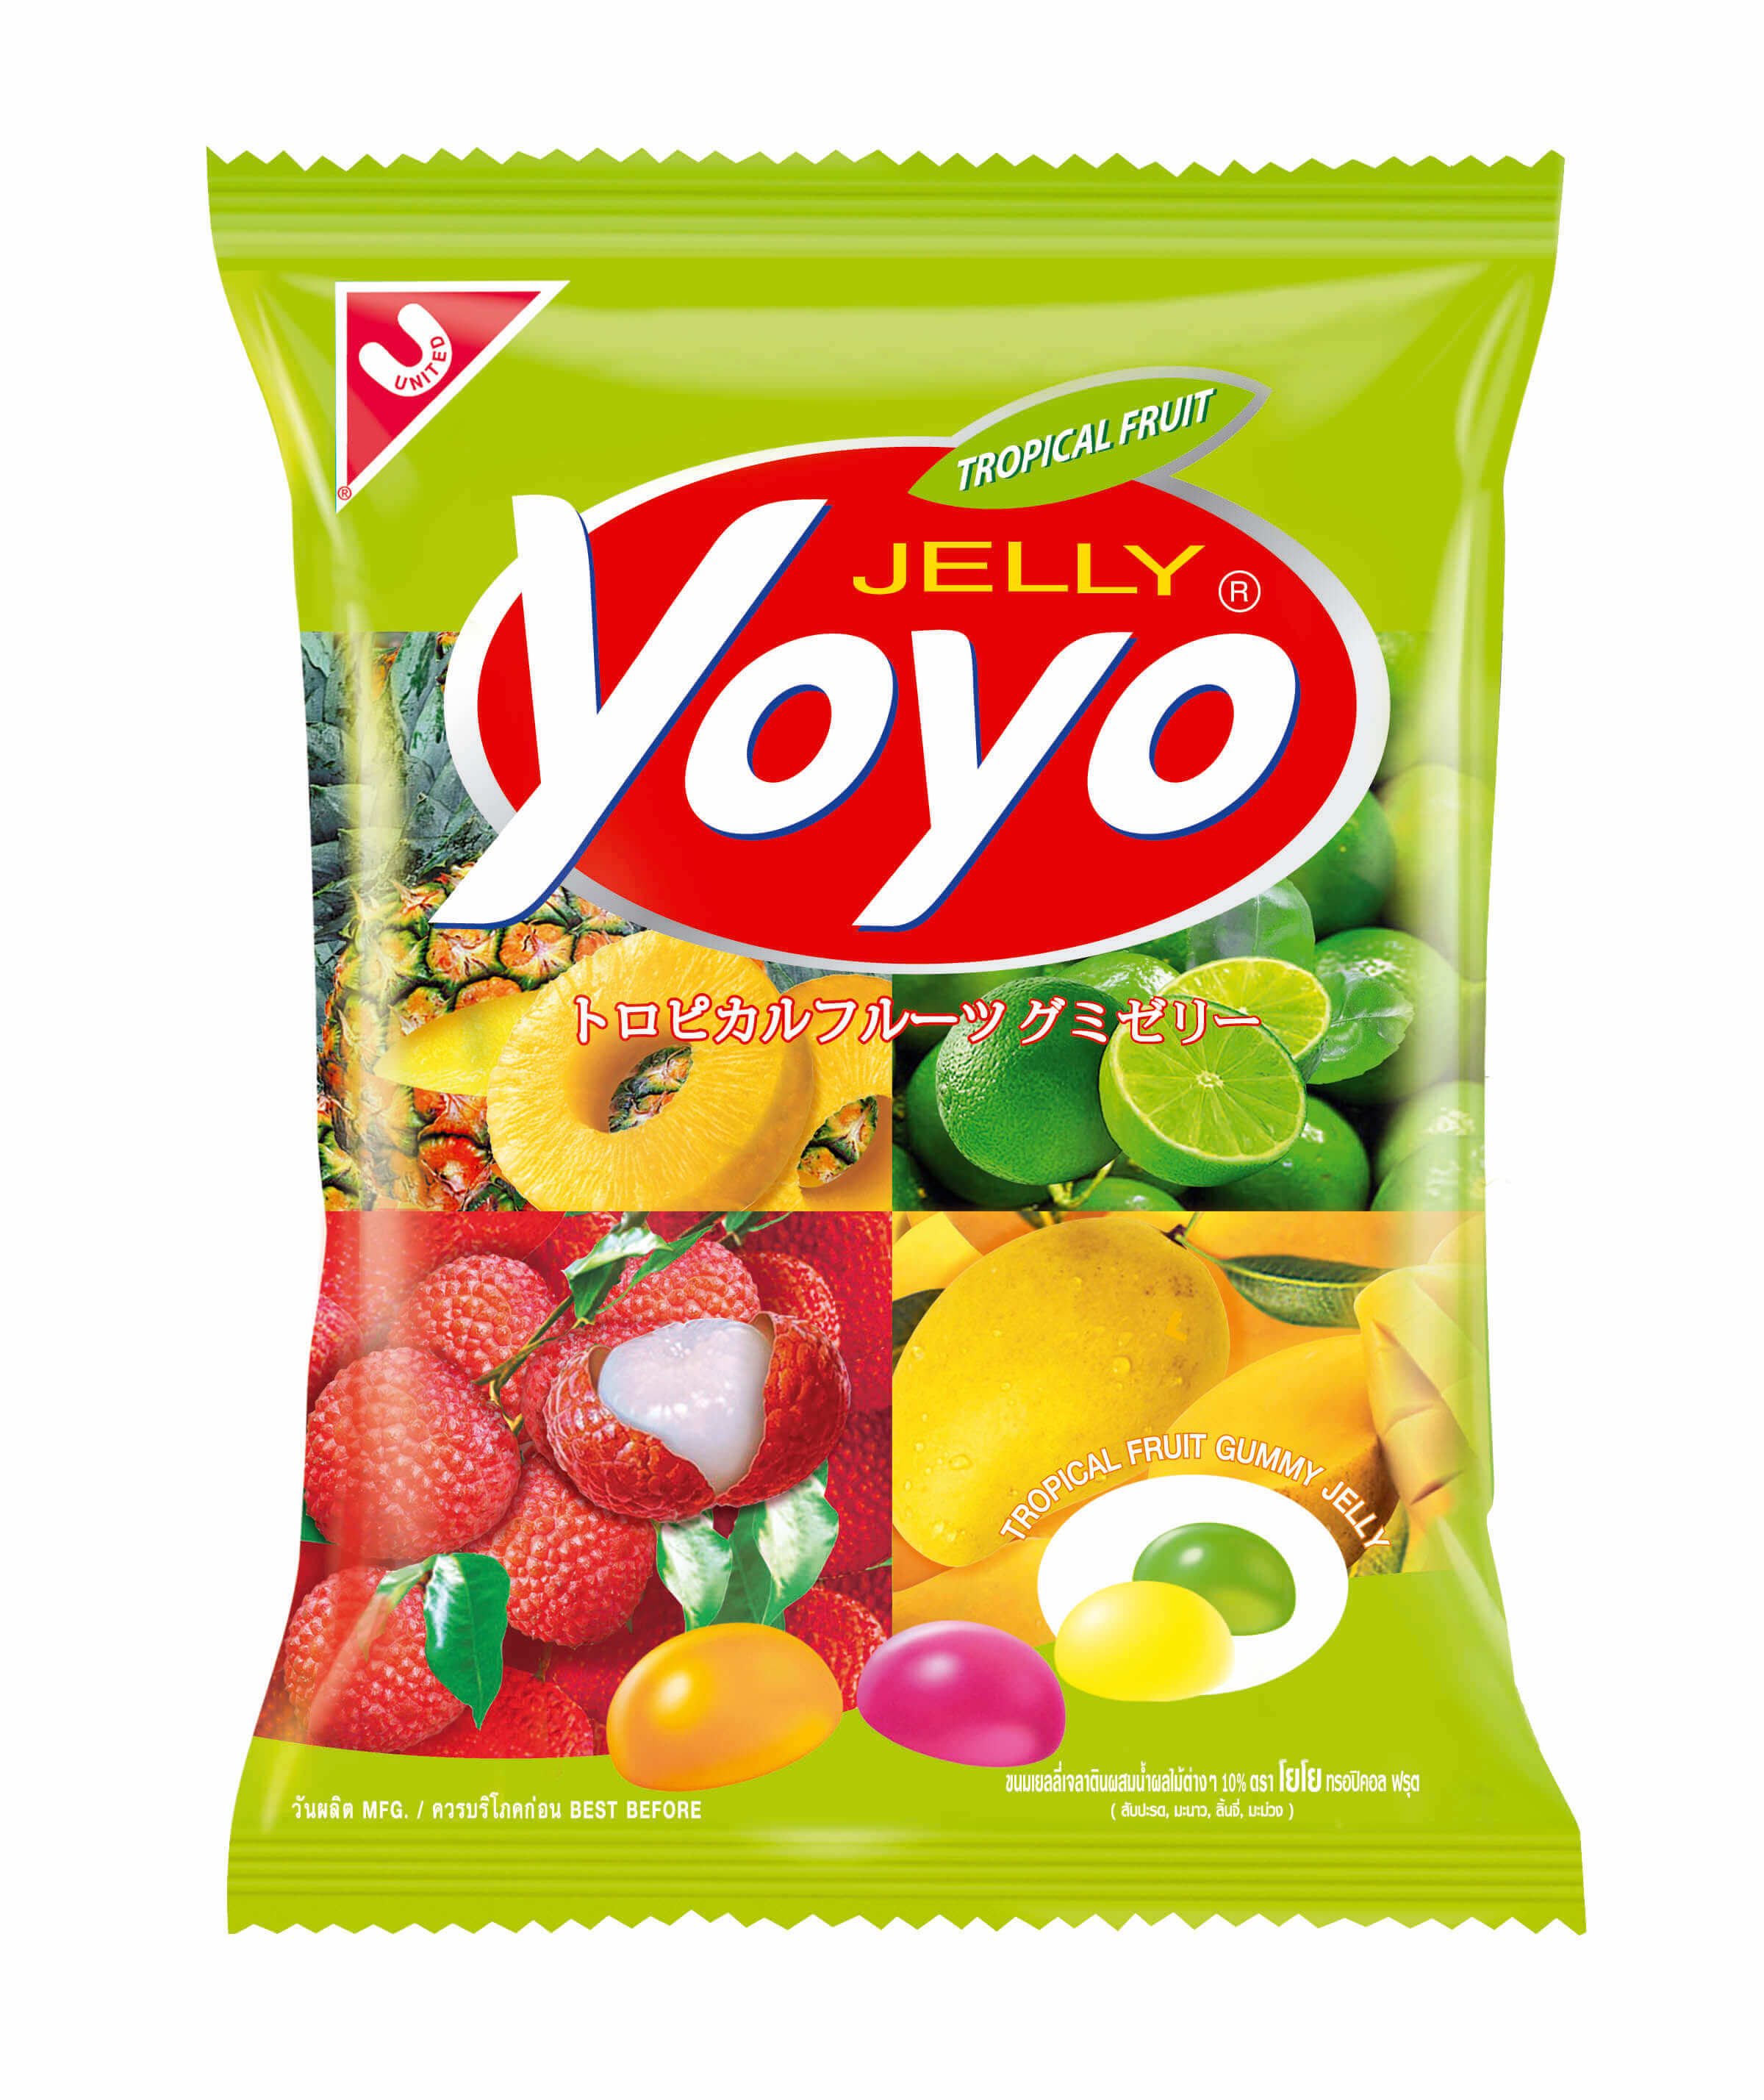 Yoyo Jelly Tropical Fruit 80g